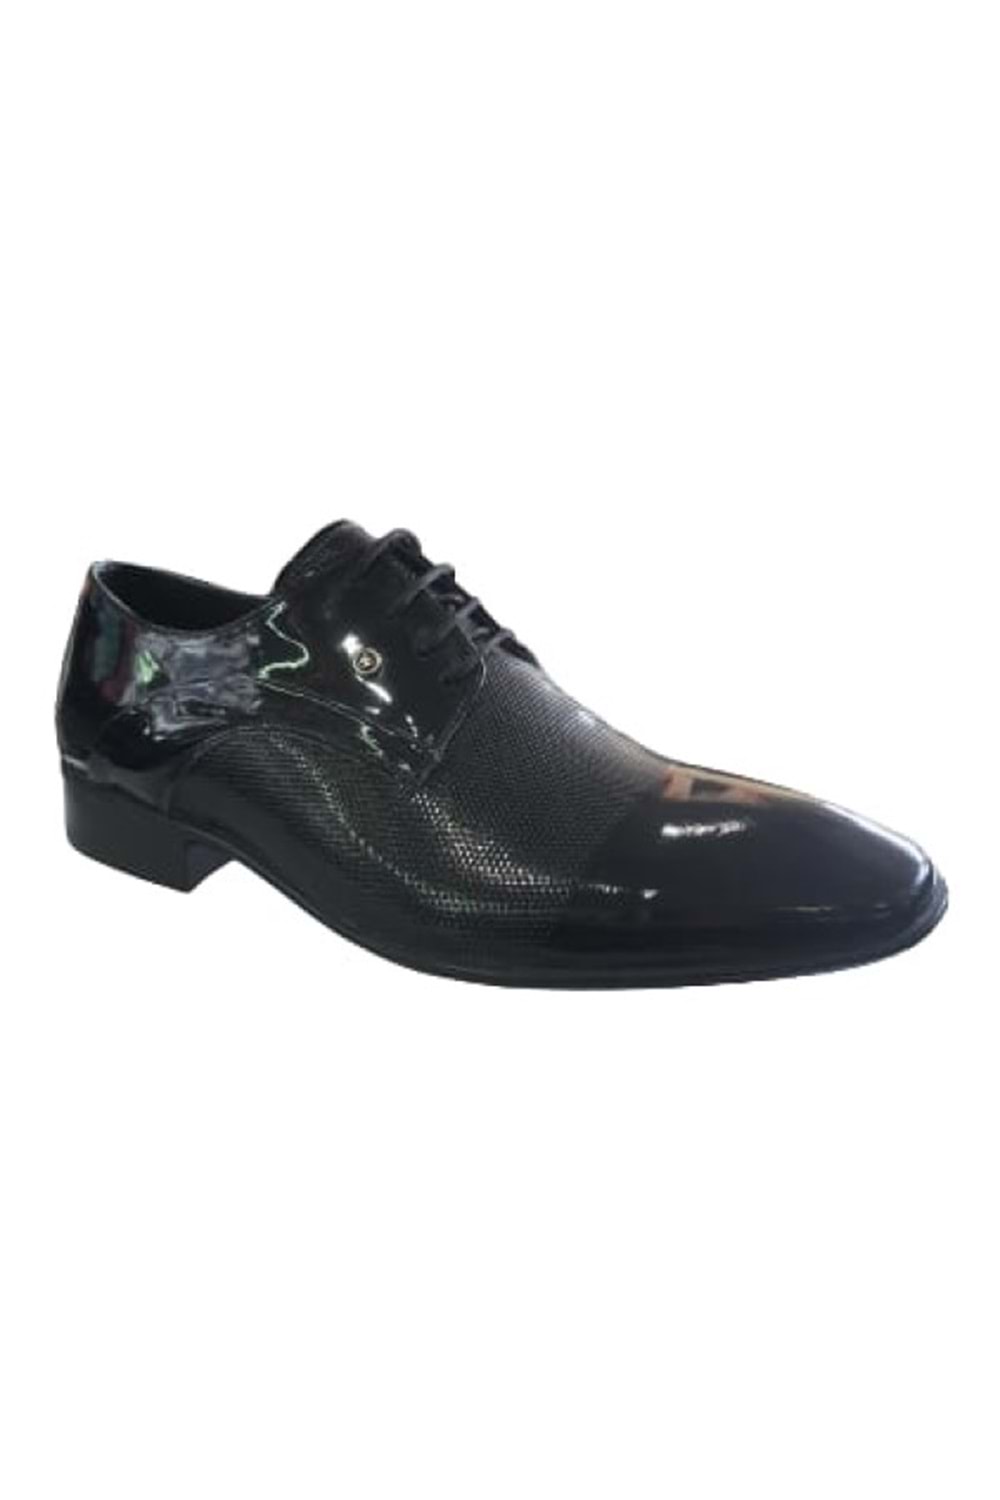 Wonder 2155 Erkek Rugan Klasik Ayakkabı - Siyah